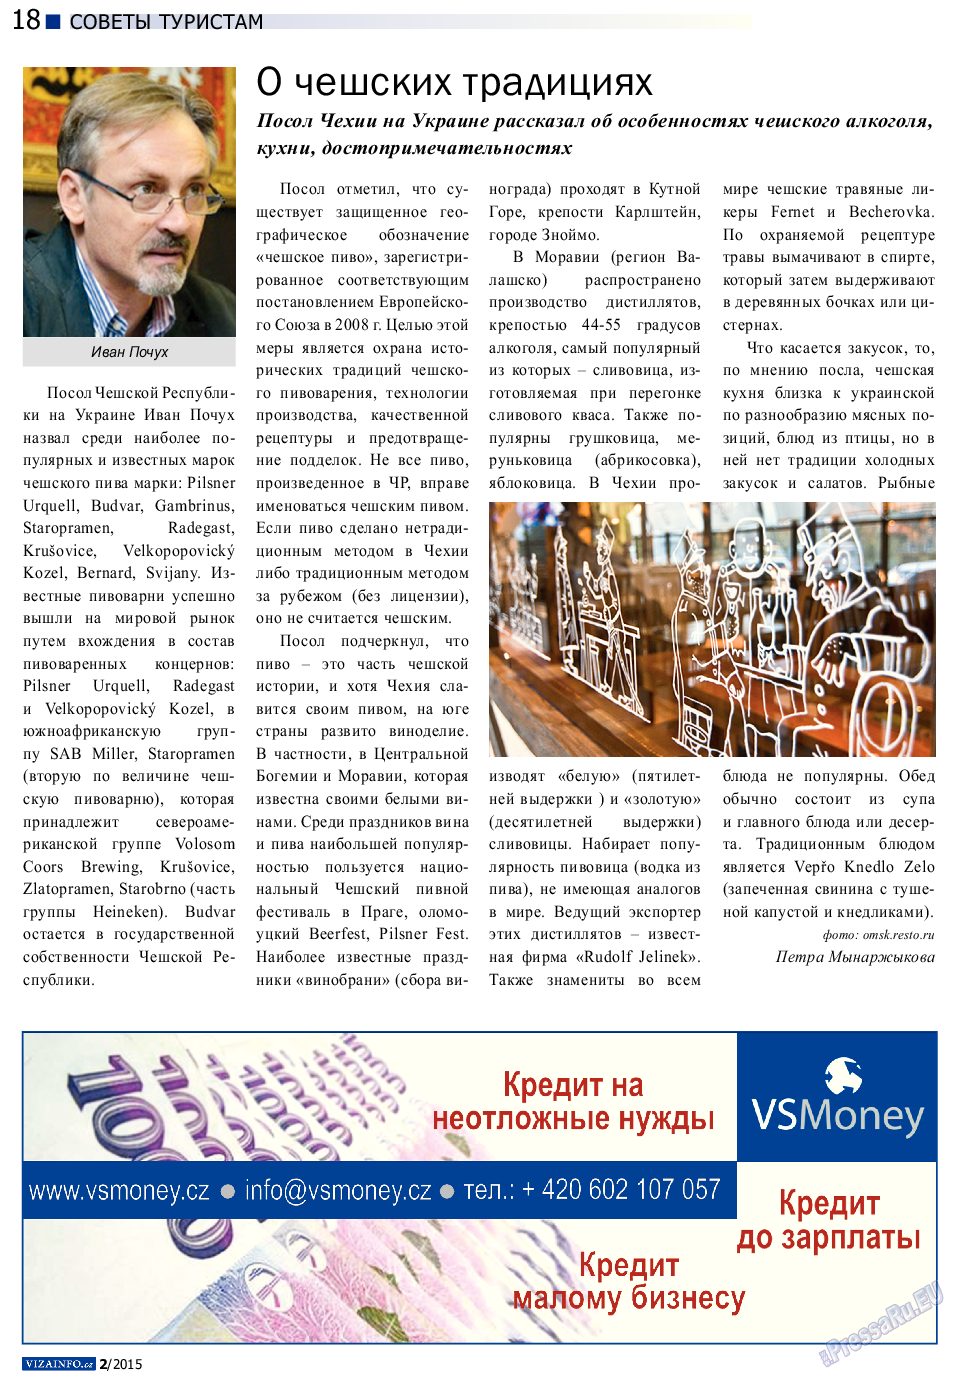 Vizainfo.cz, газета. 2015 №65 стр.18